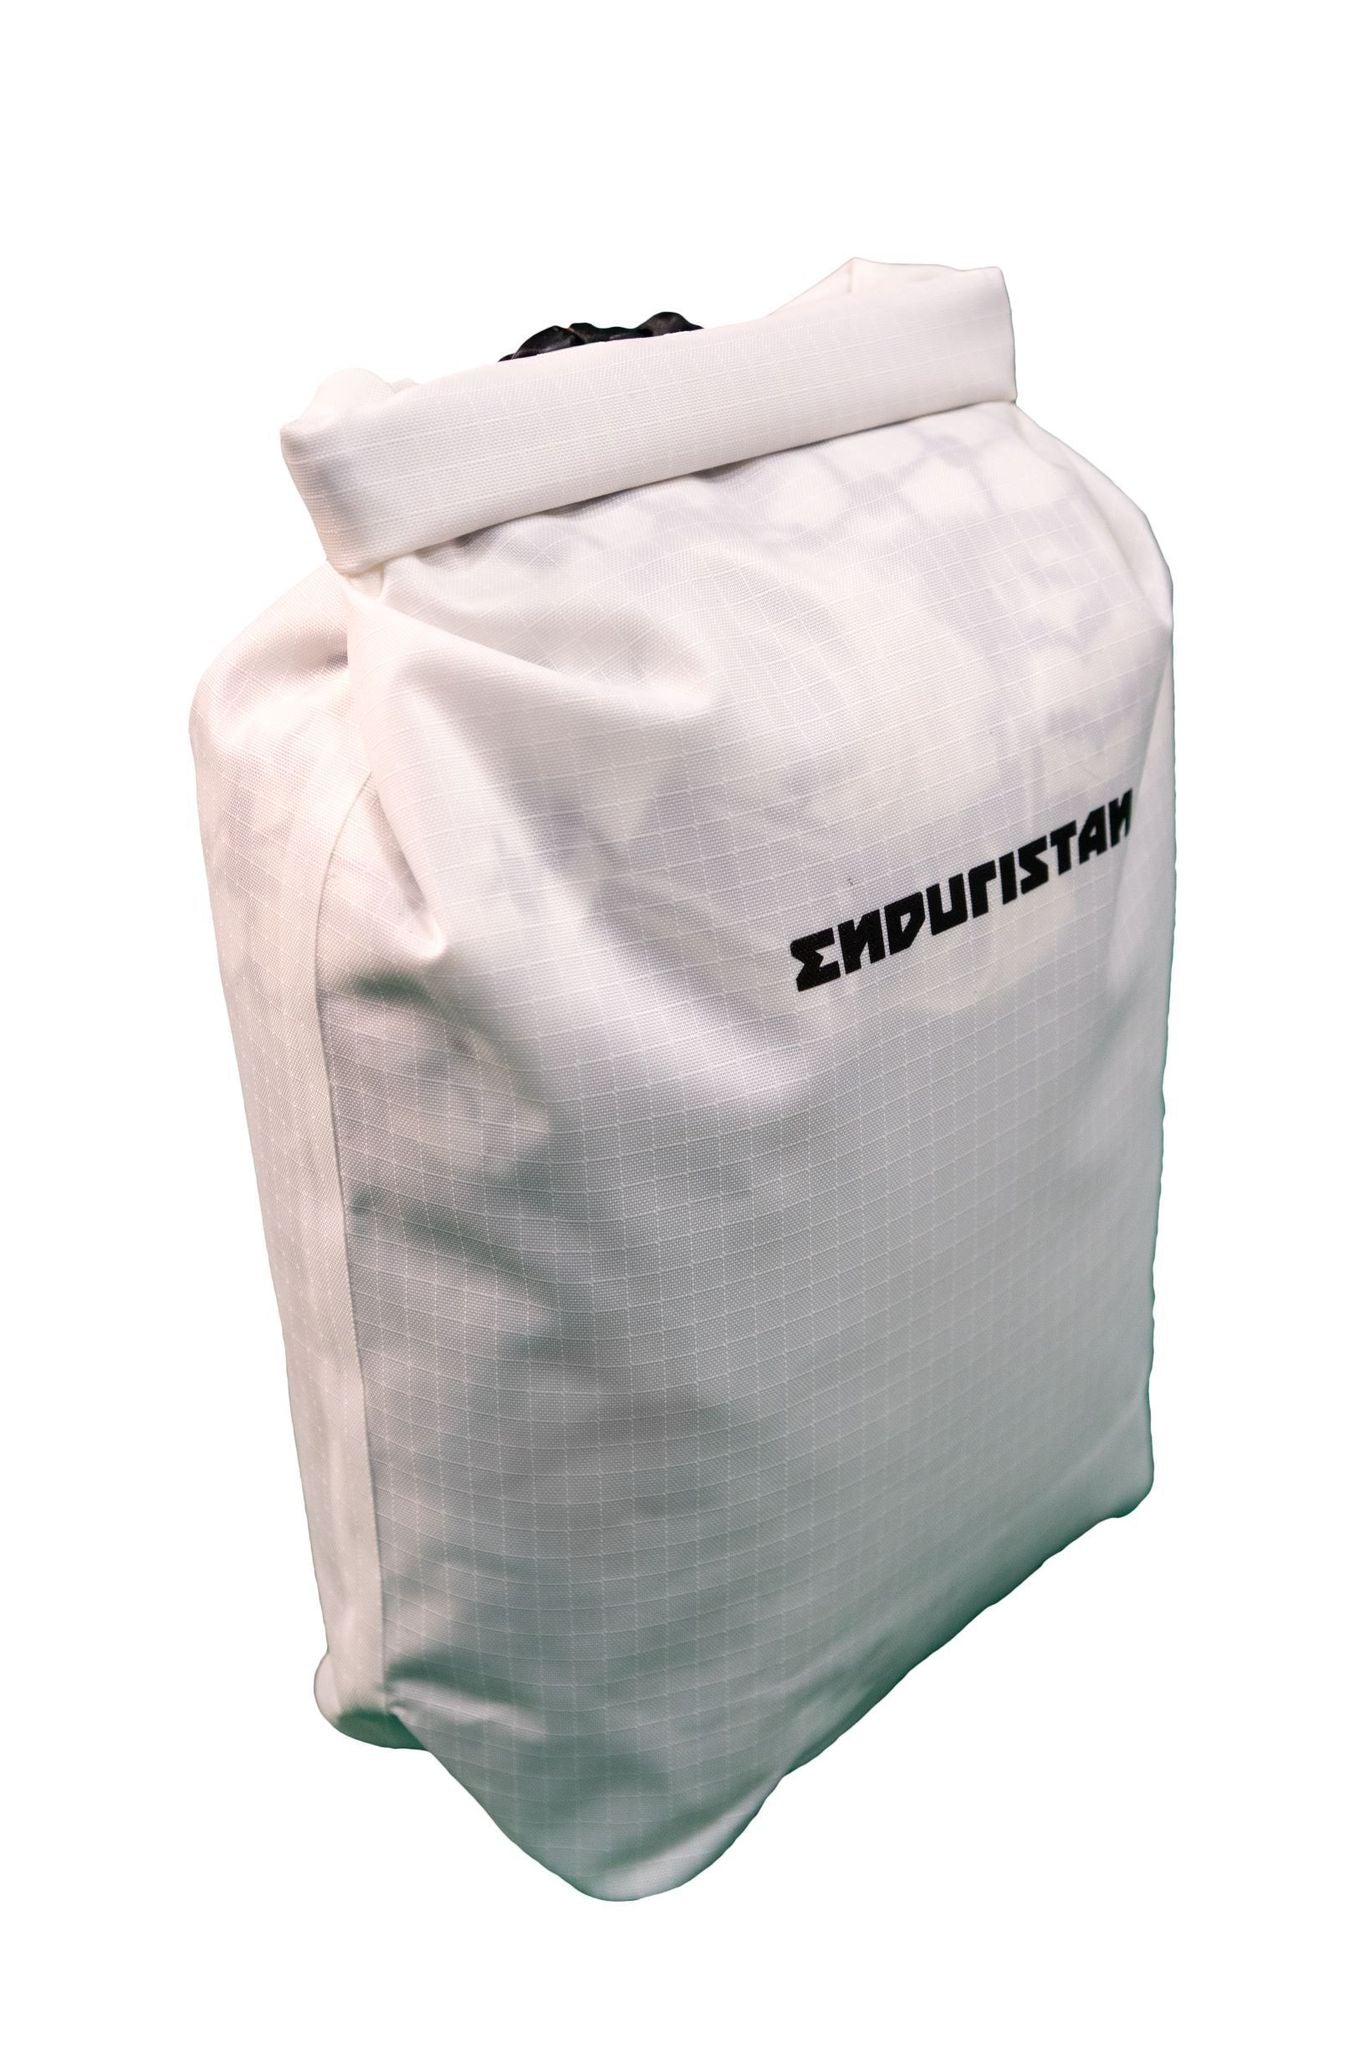 Enduristan - Isolation Bag